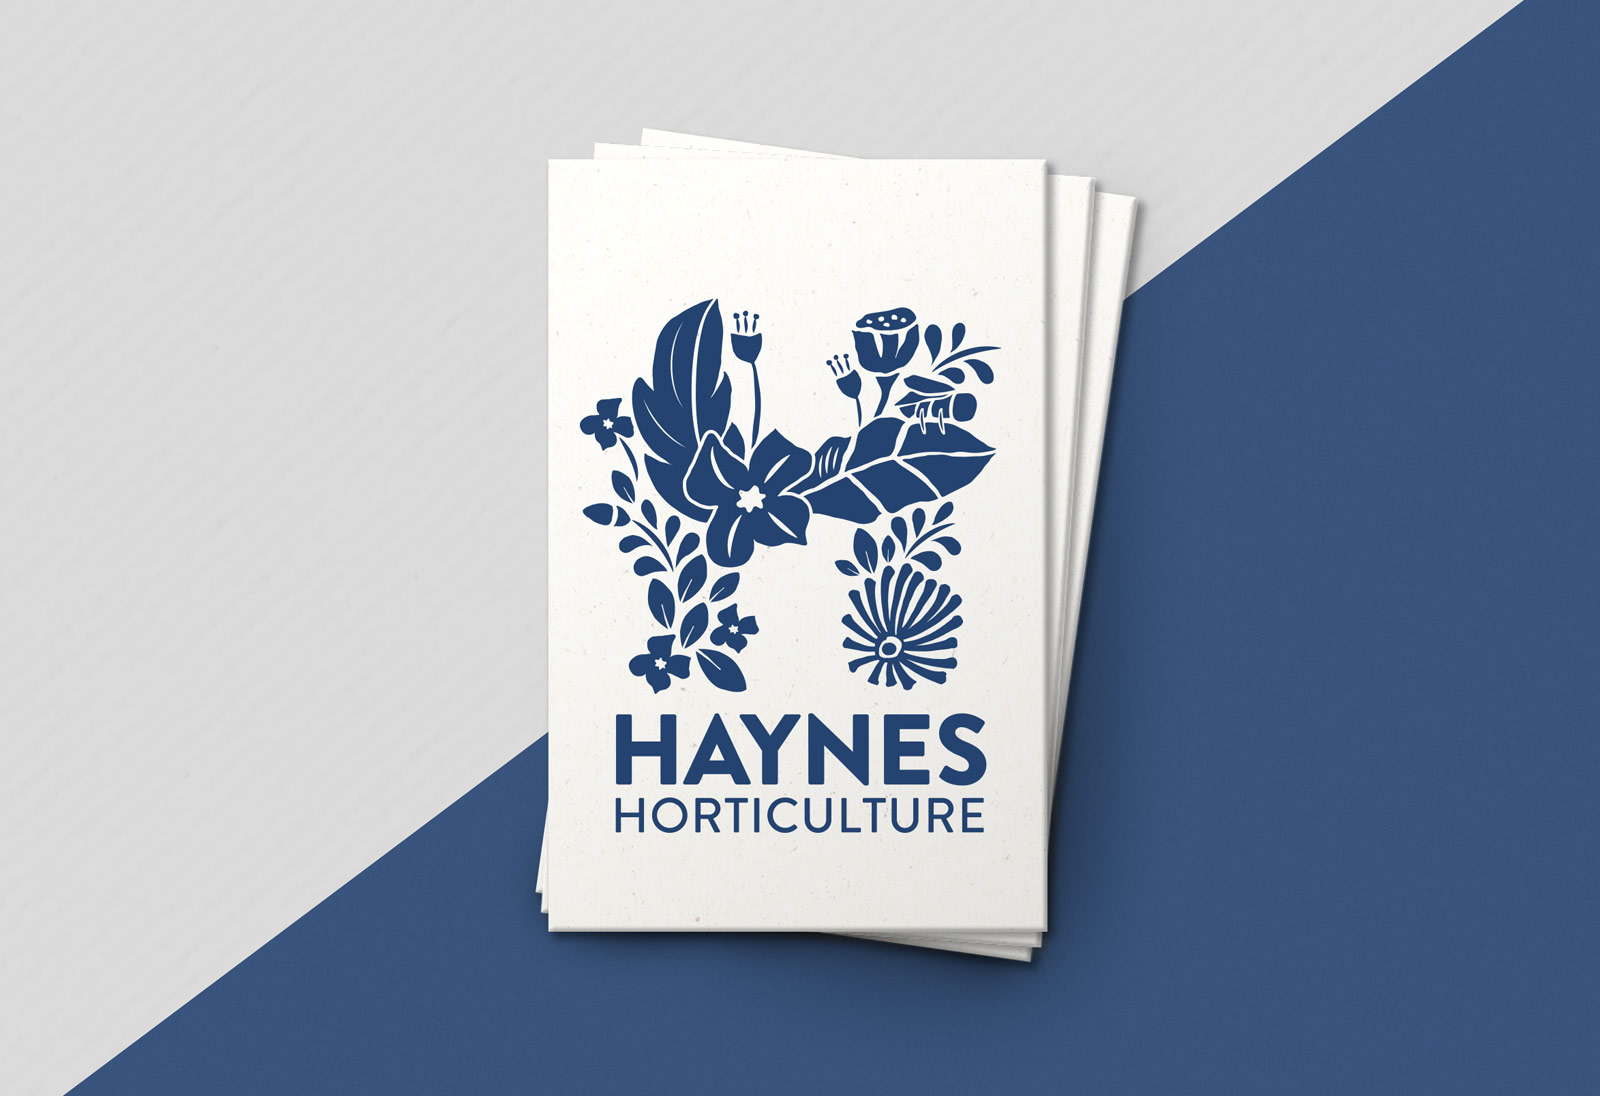 Haynes Horticulture